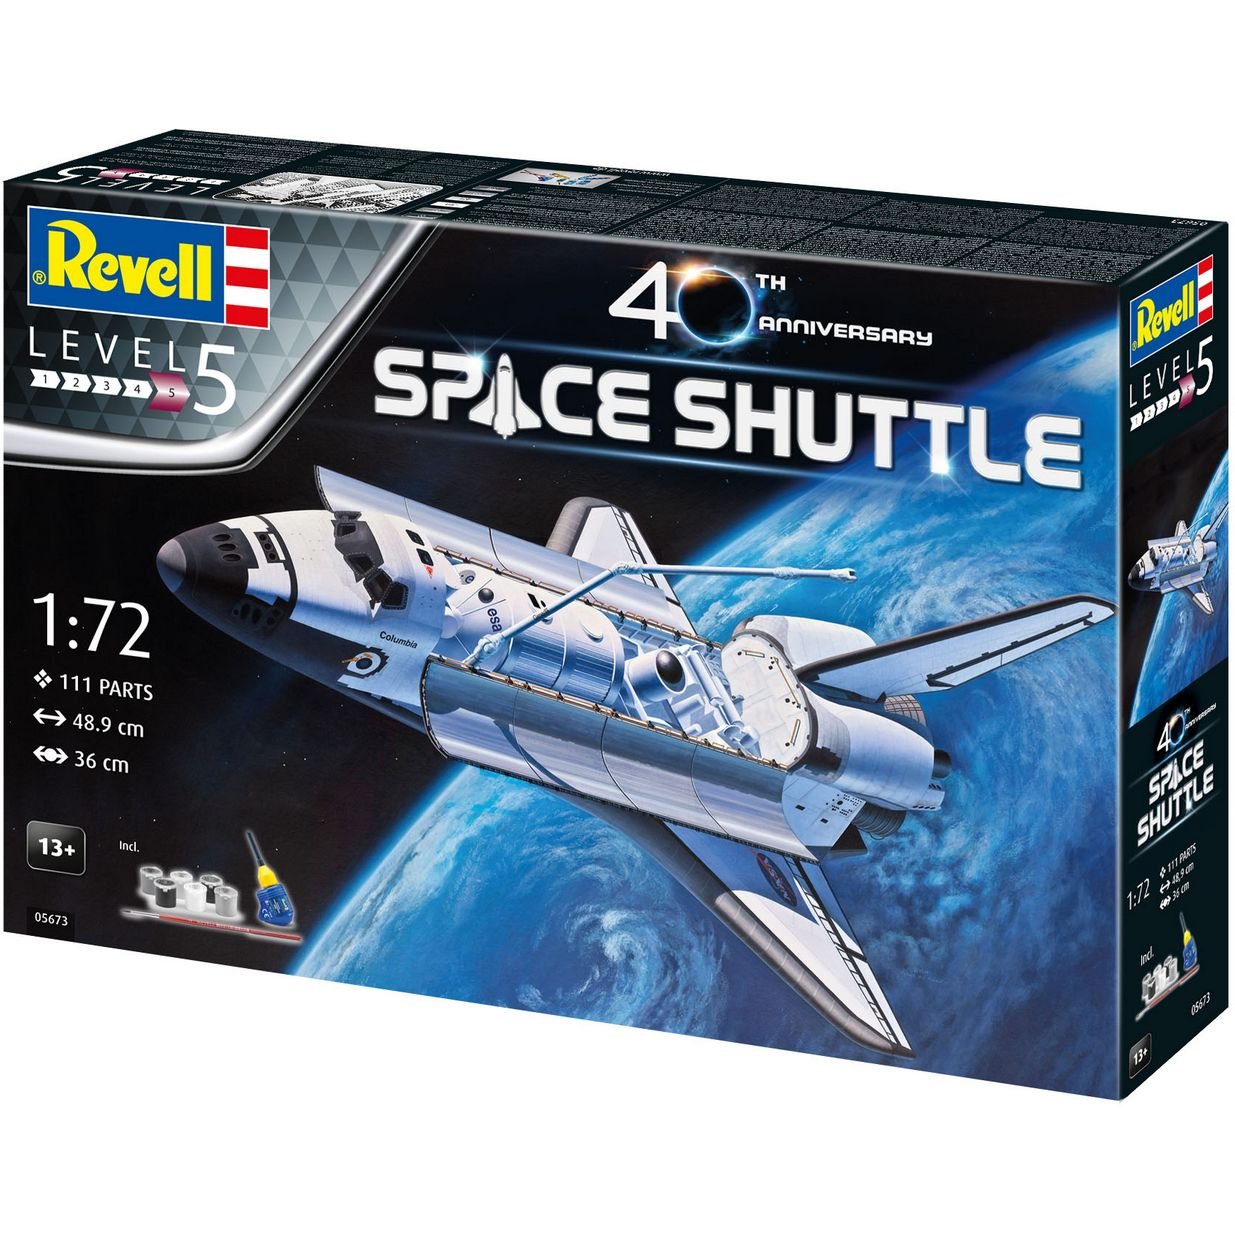 Збірна модель Revell Набір Space Shuttle, рівень 5, масштаб 1:72, 111 деталей (RVL-05673) - фото 1